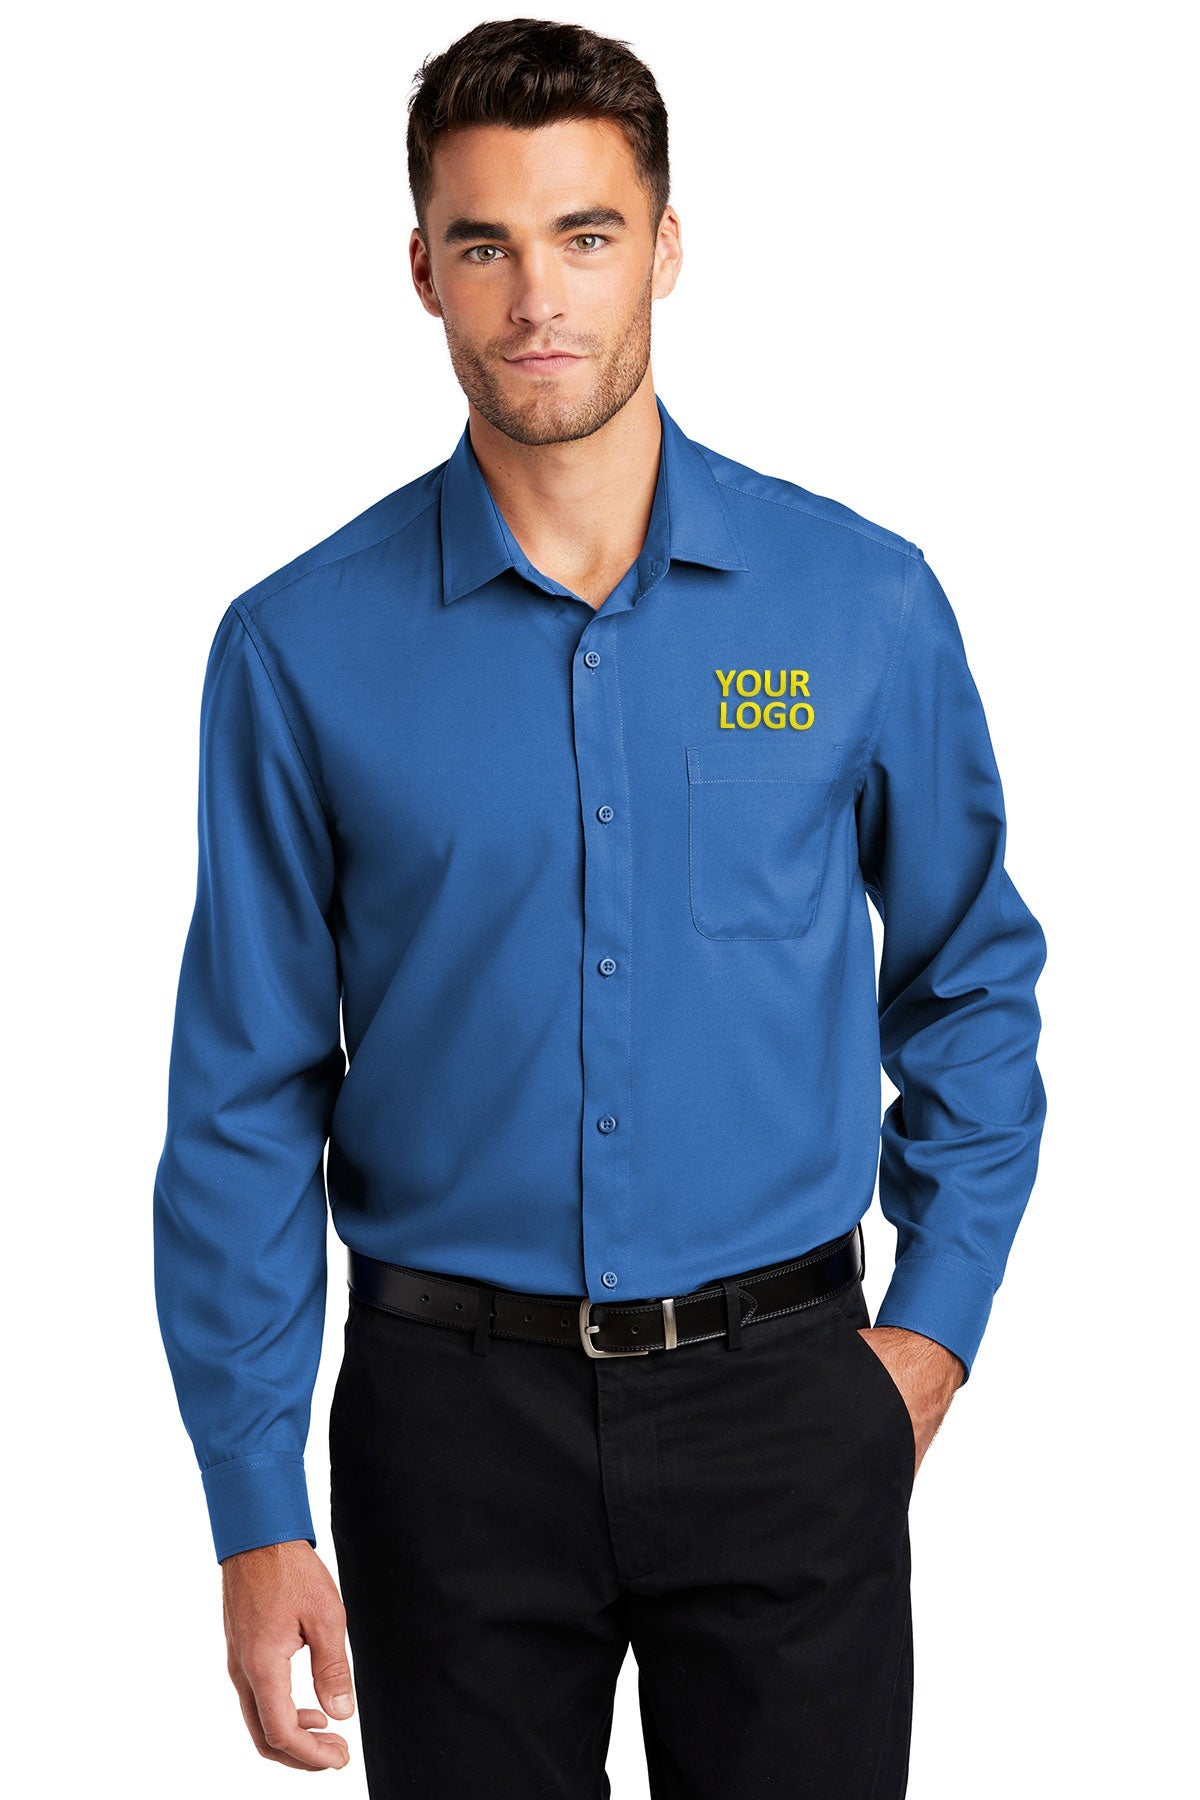 Port Authority Ladies Long Sleeve Performance Custom Staff Shirts, True Blue